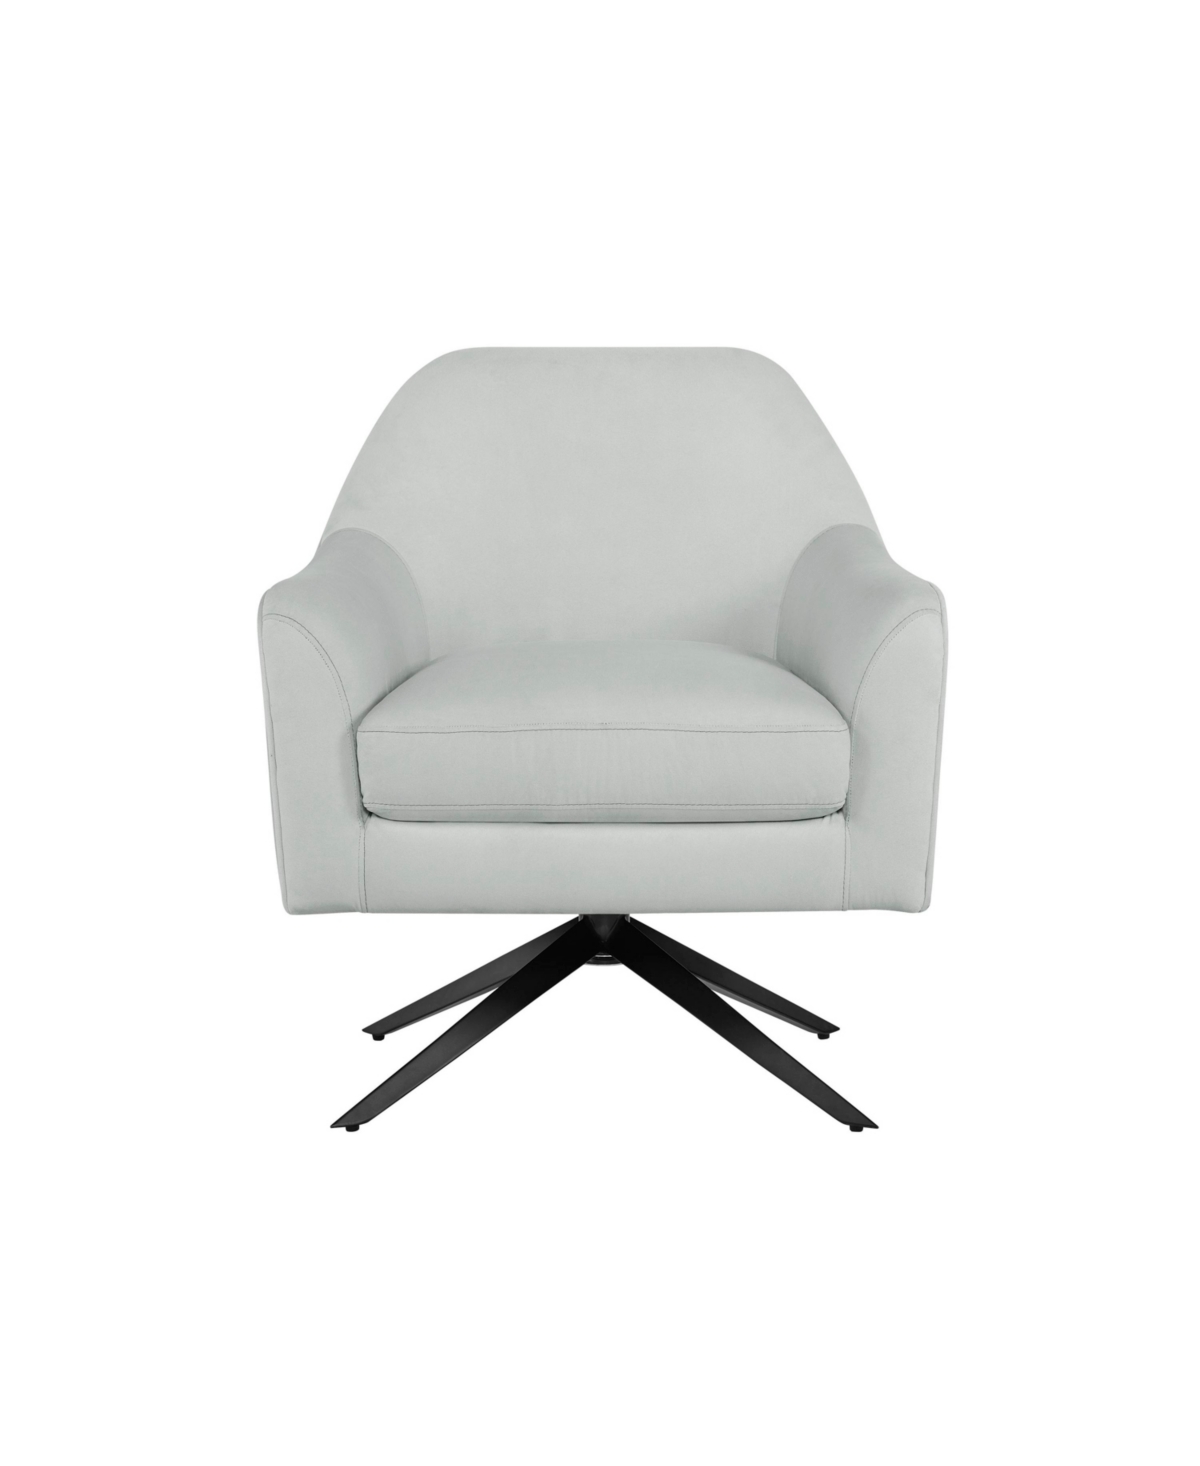 Lifestyle Solutions 29.1" Velvet Gunnar Swivel Accent Chair In Light Gray